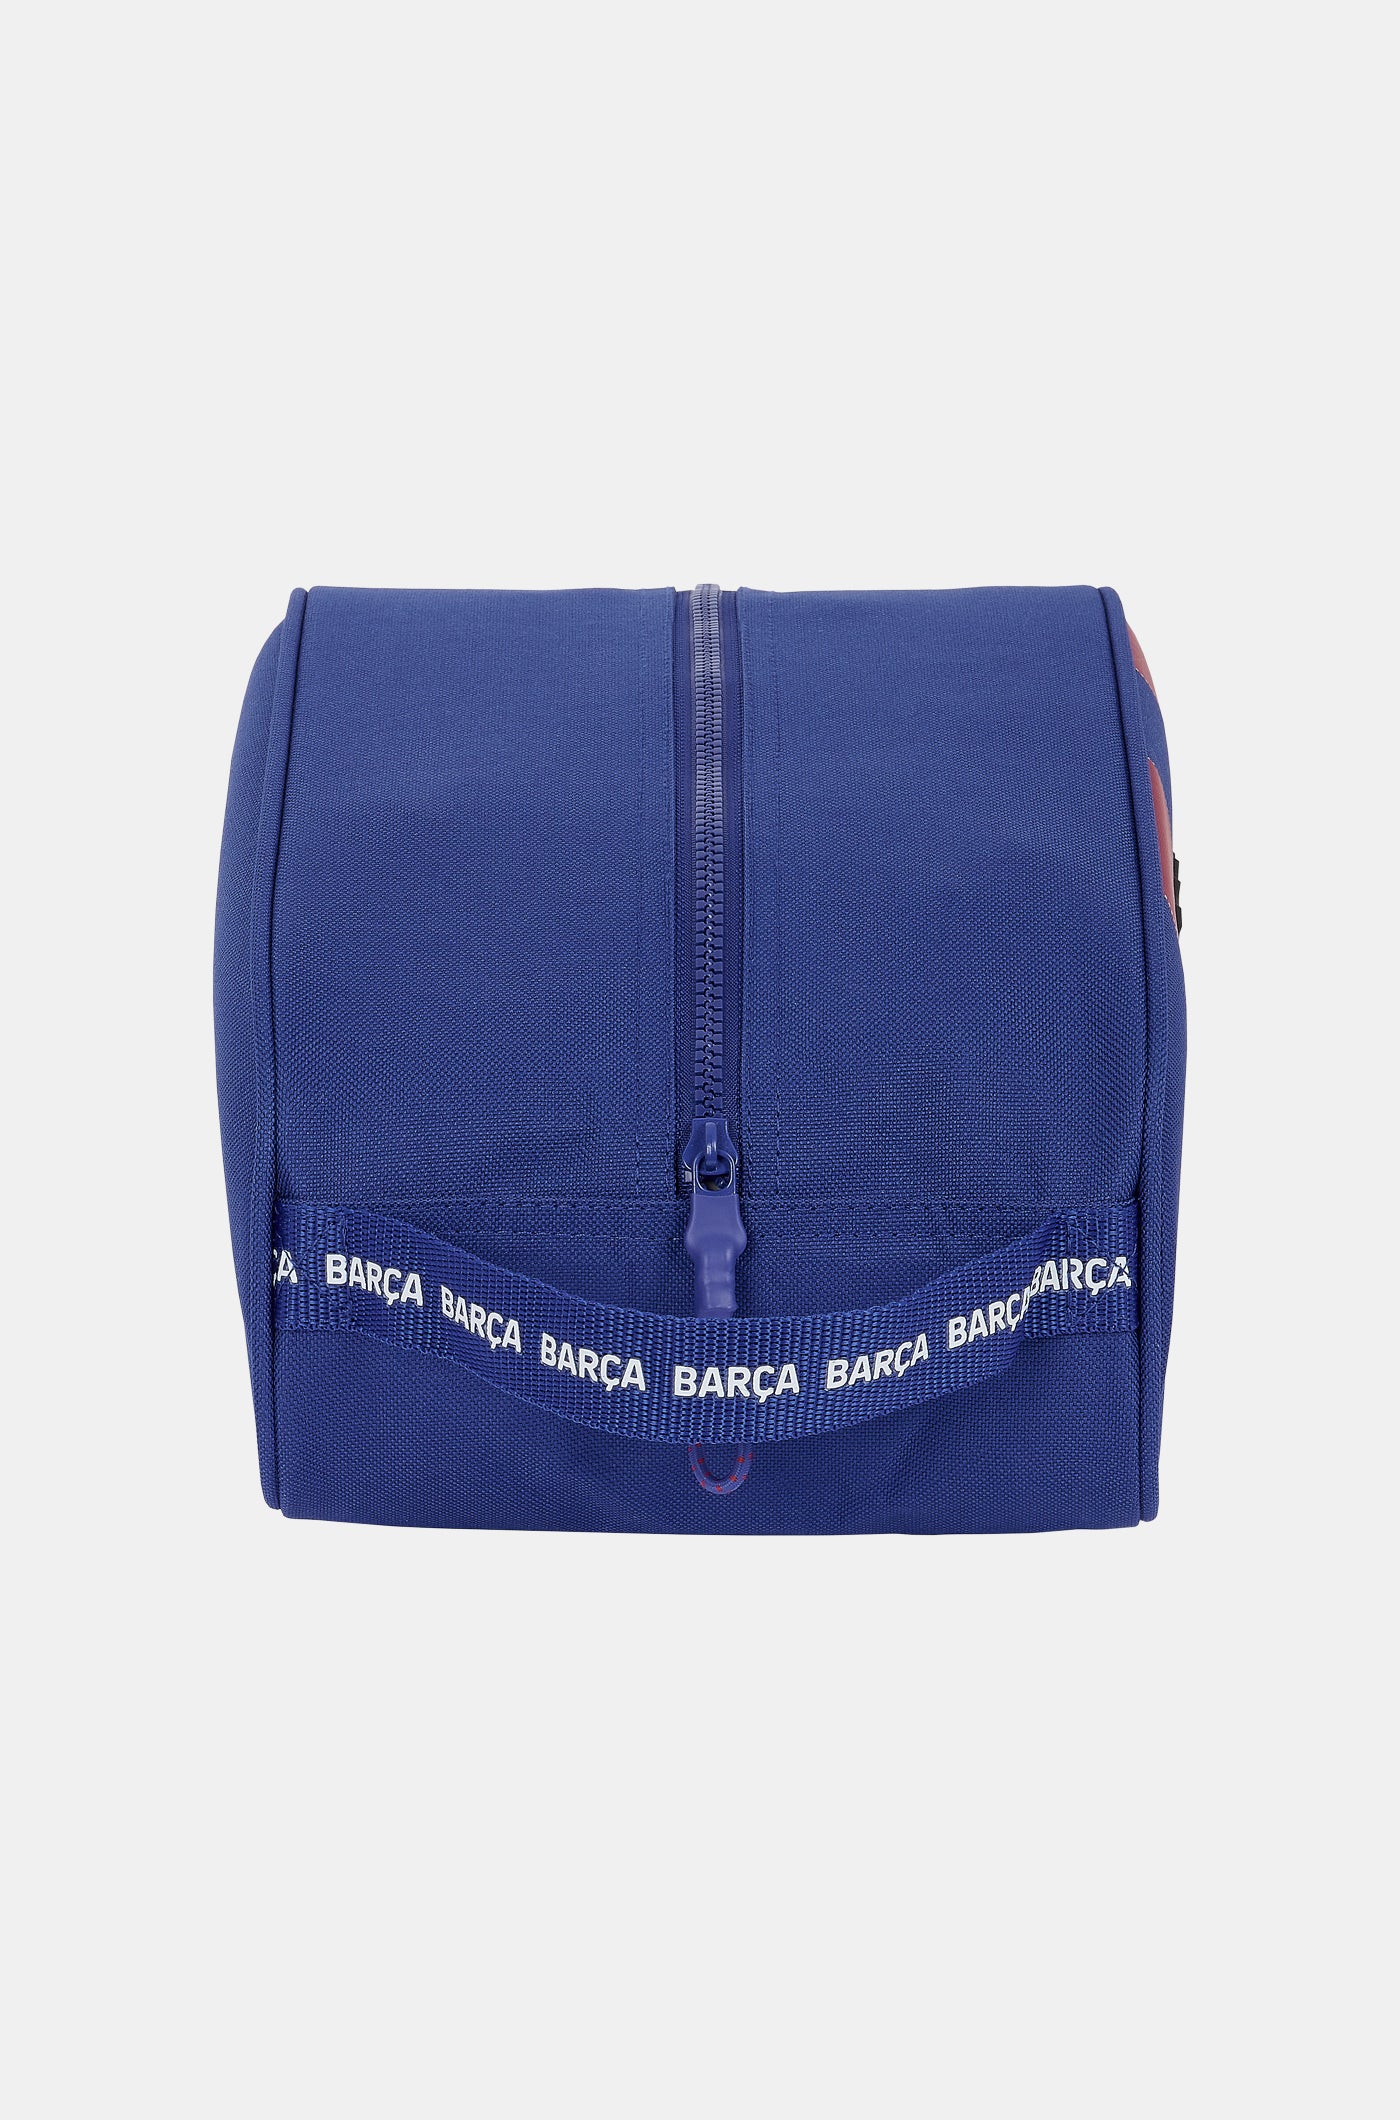 Shoe bag home kit FC Barcelona 23/24